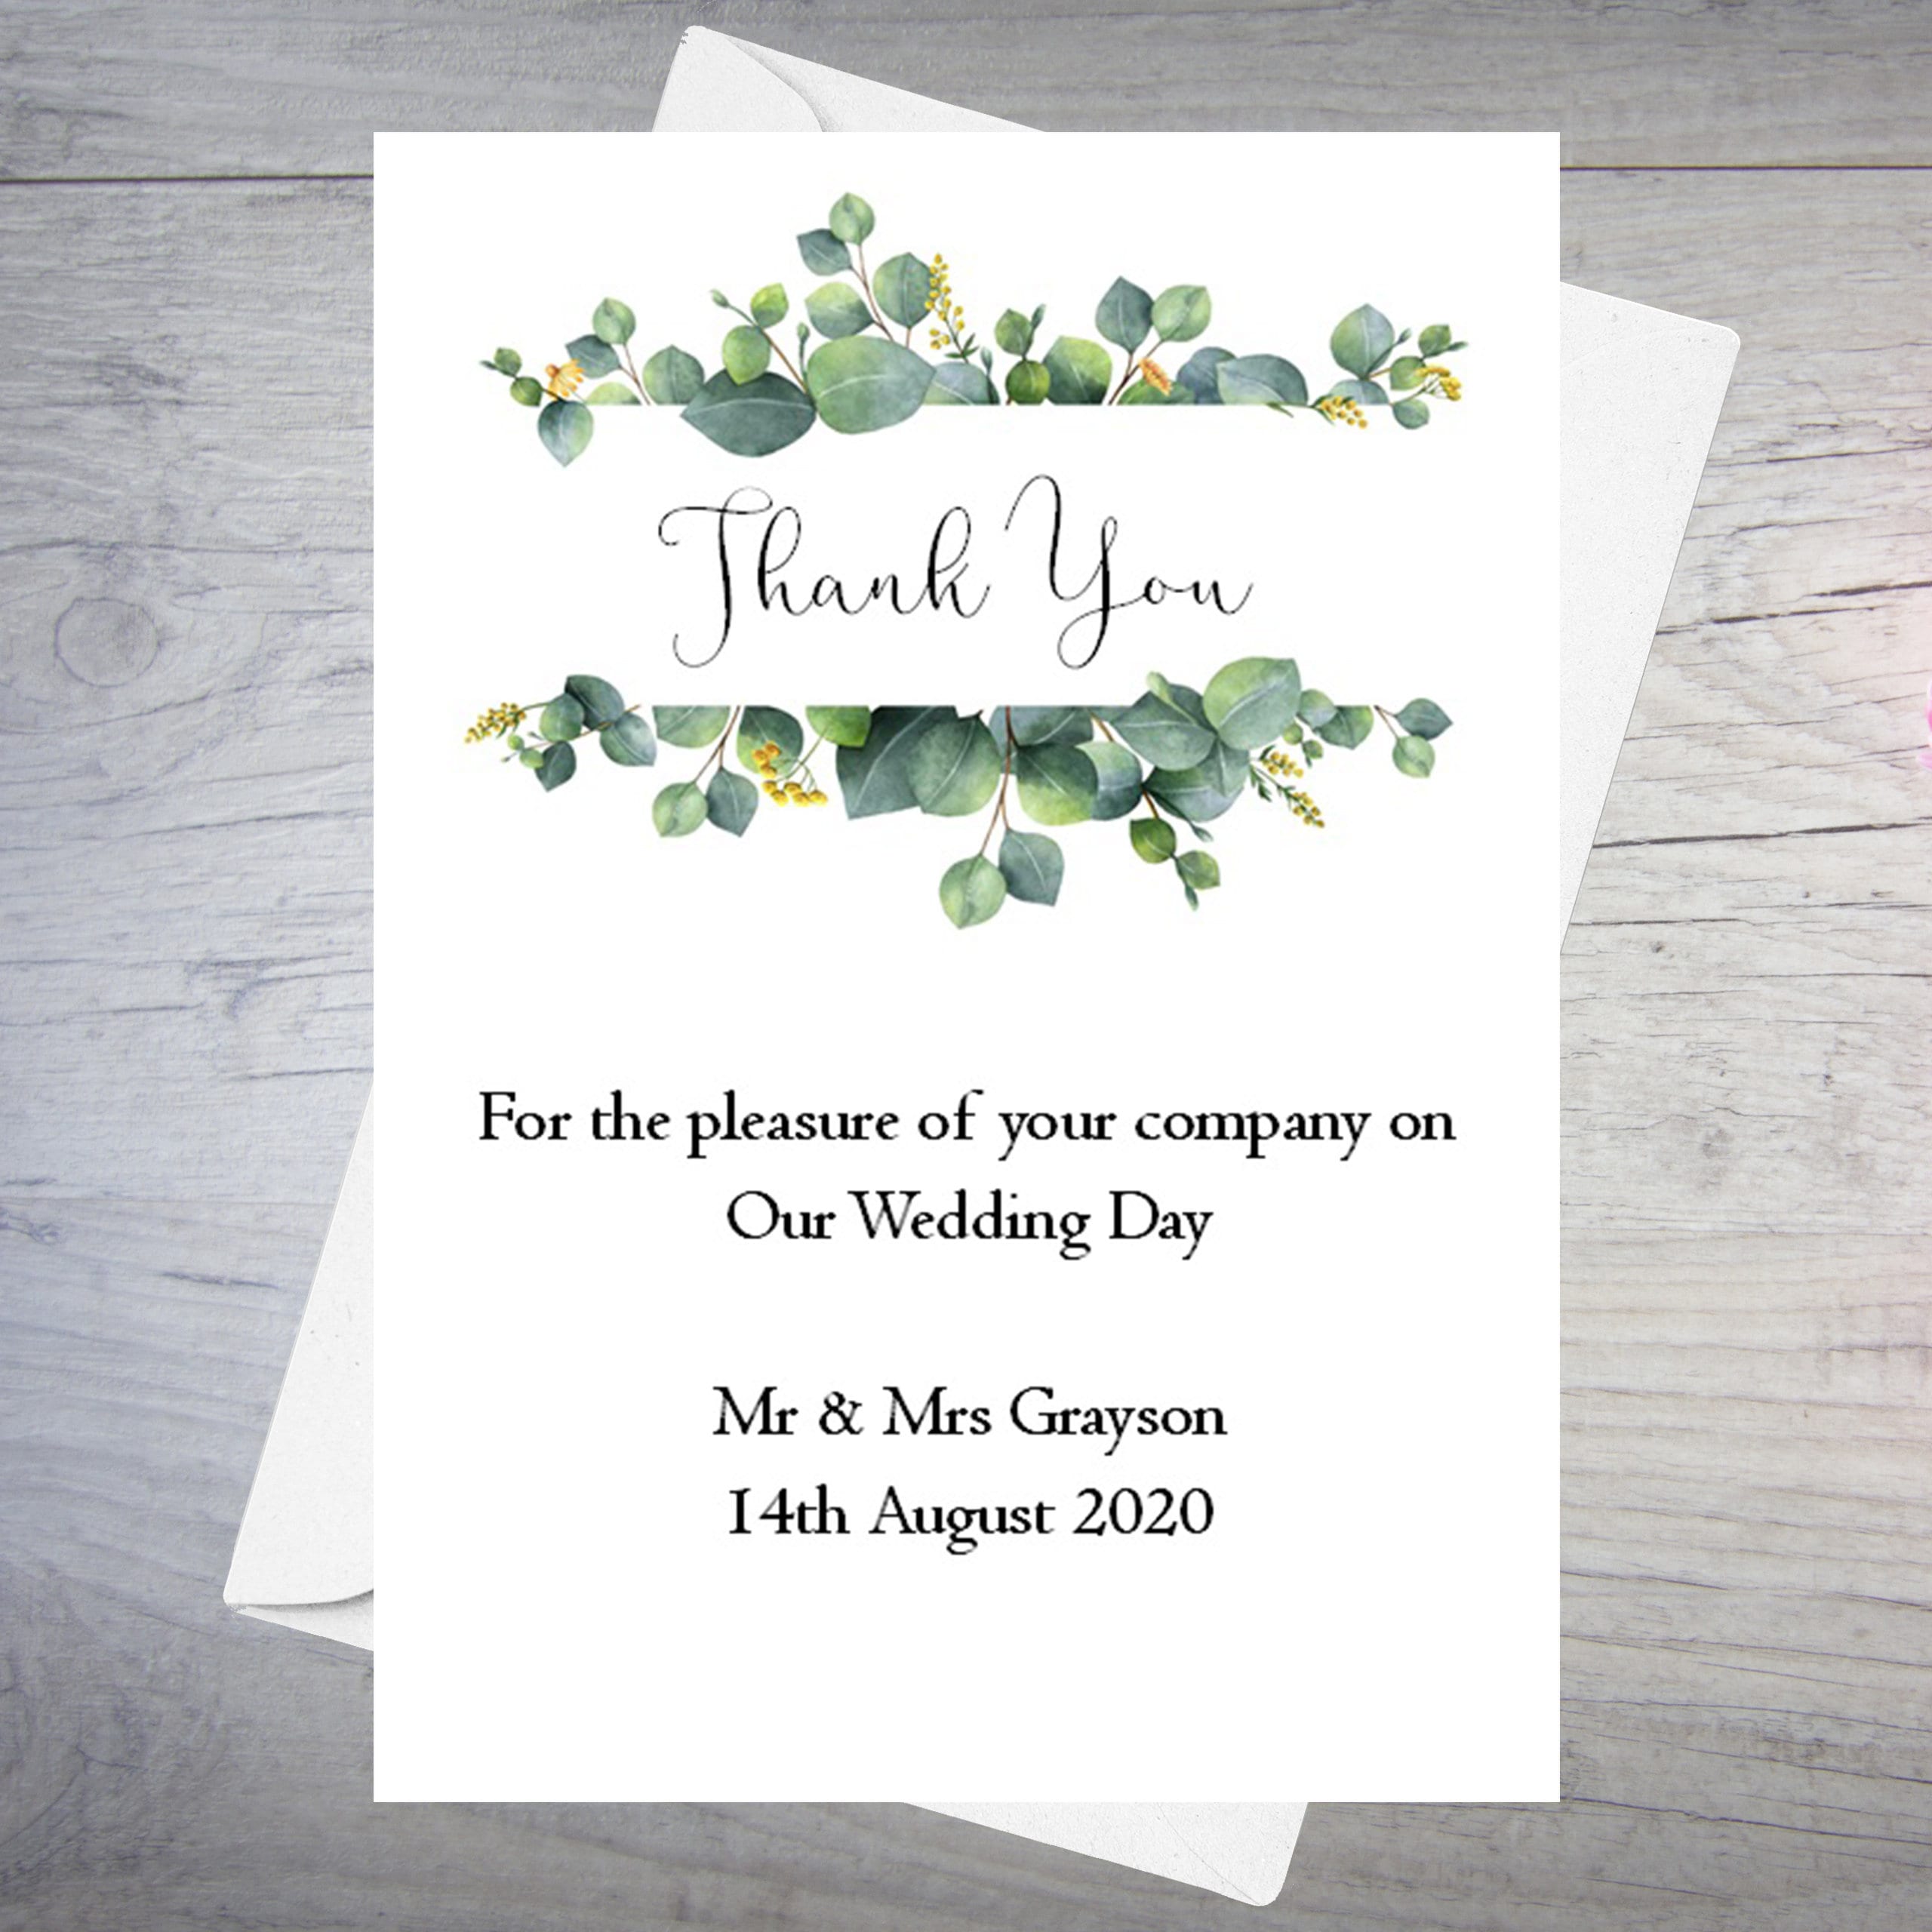 Envelopes packs of 10 Personalised Wedding Thank You Cards inc Photos 